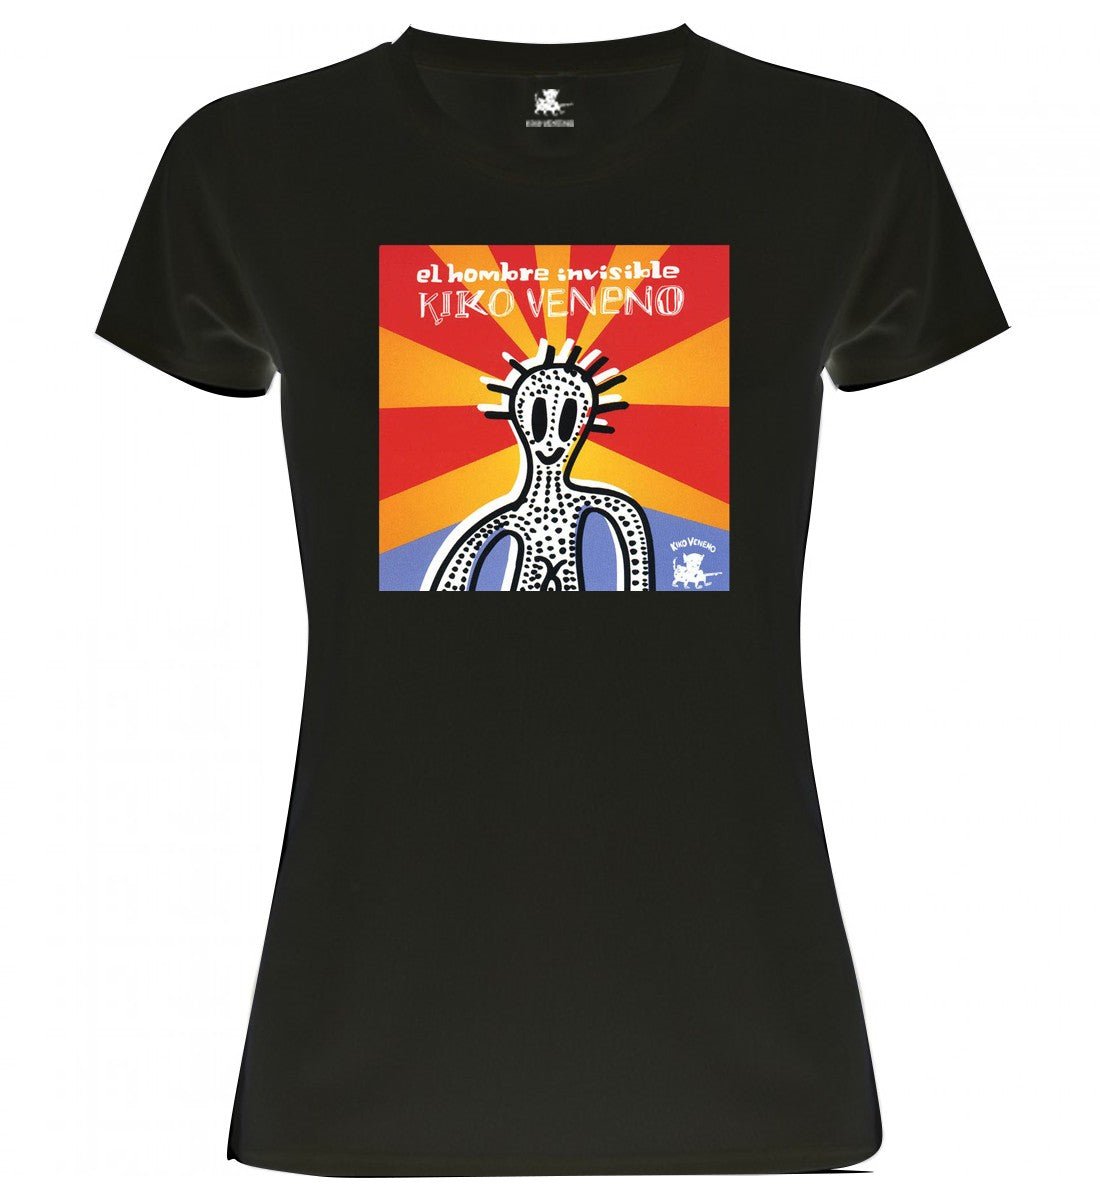 Kiko Veneno - Camiseta "El hombre invisible II" - D2fy - Kiko Veneno